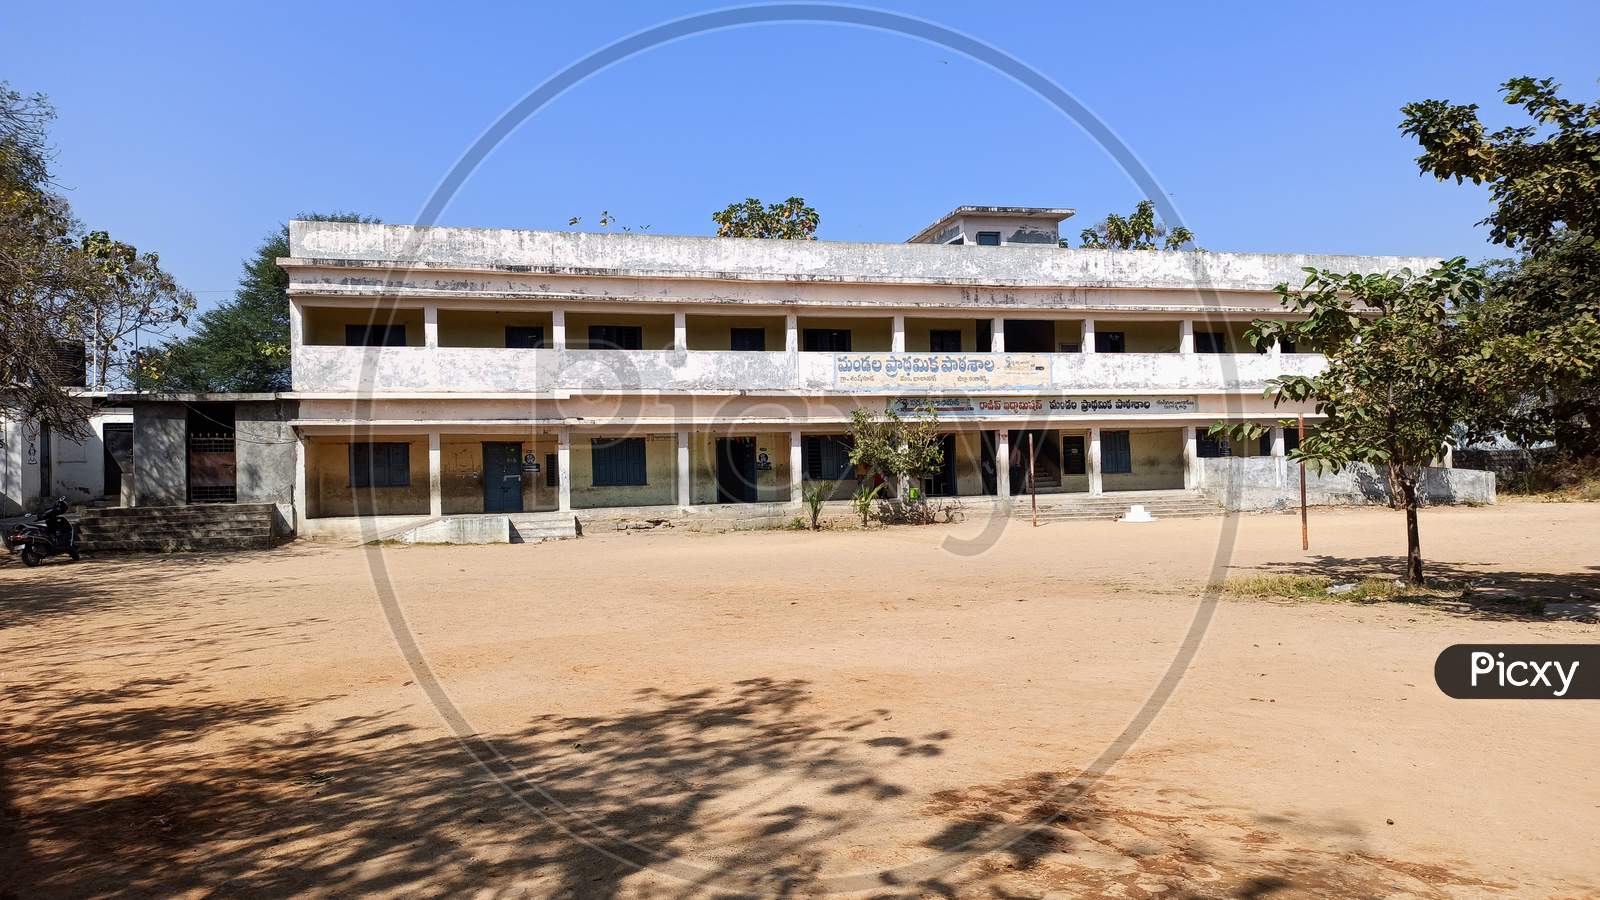 Upper Primary School Shamshiguda Kukatpally Hyderabad Telangana India